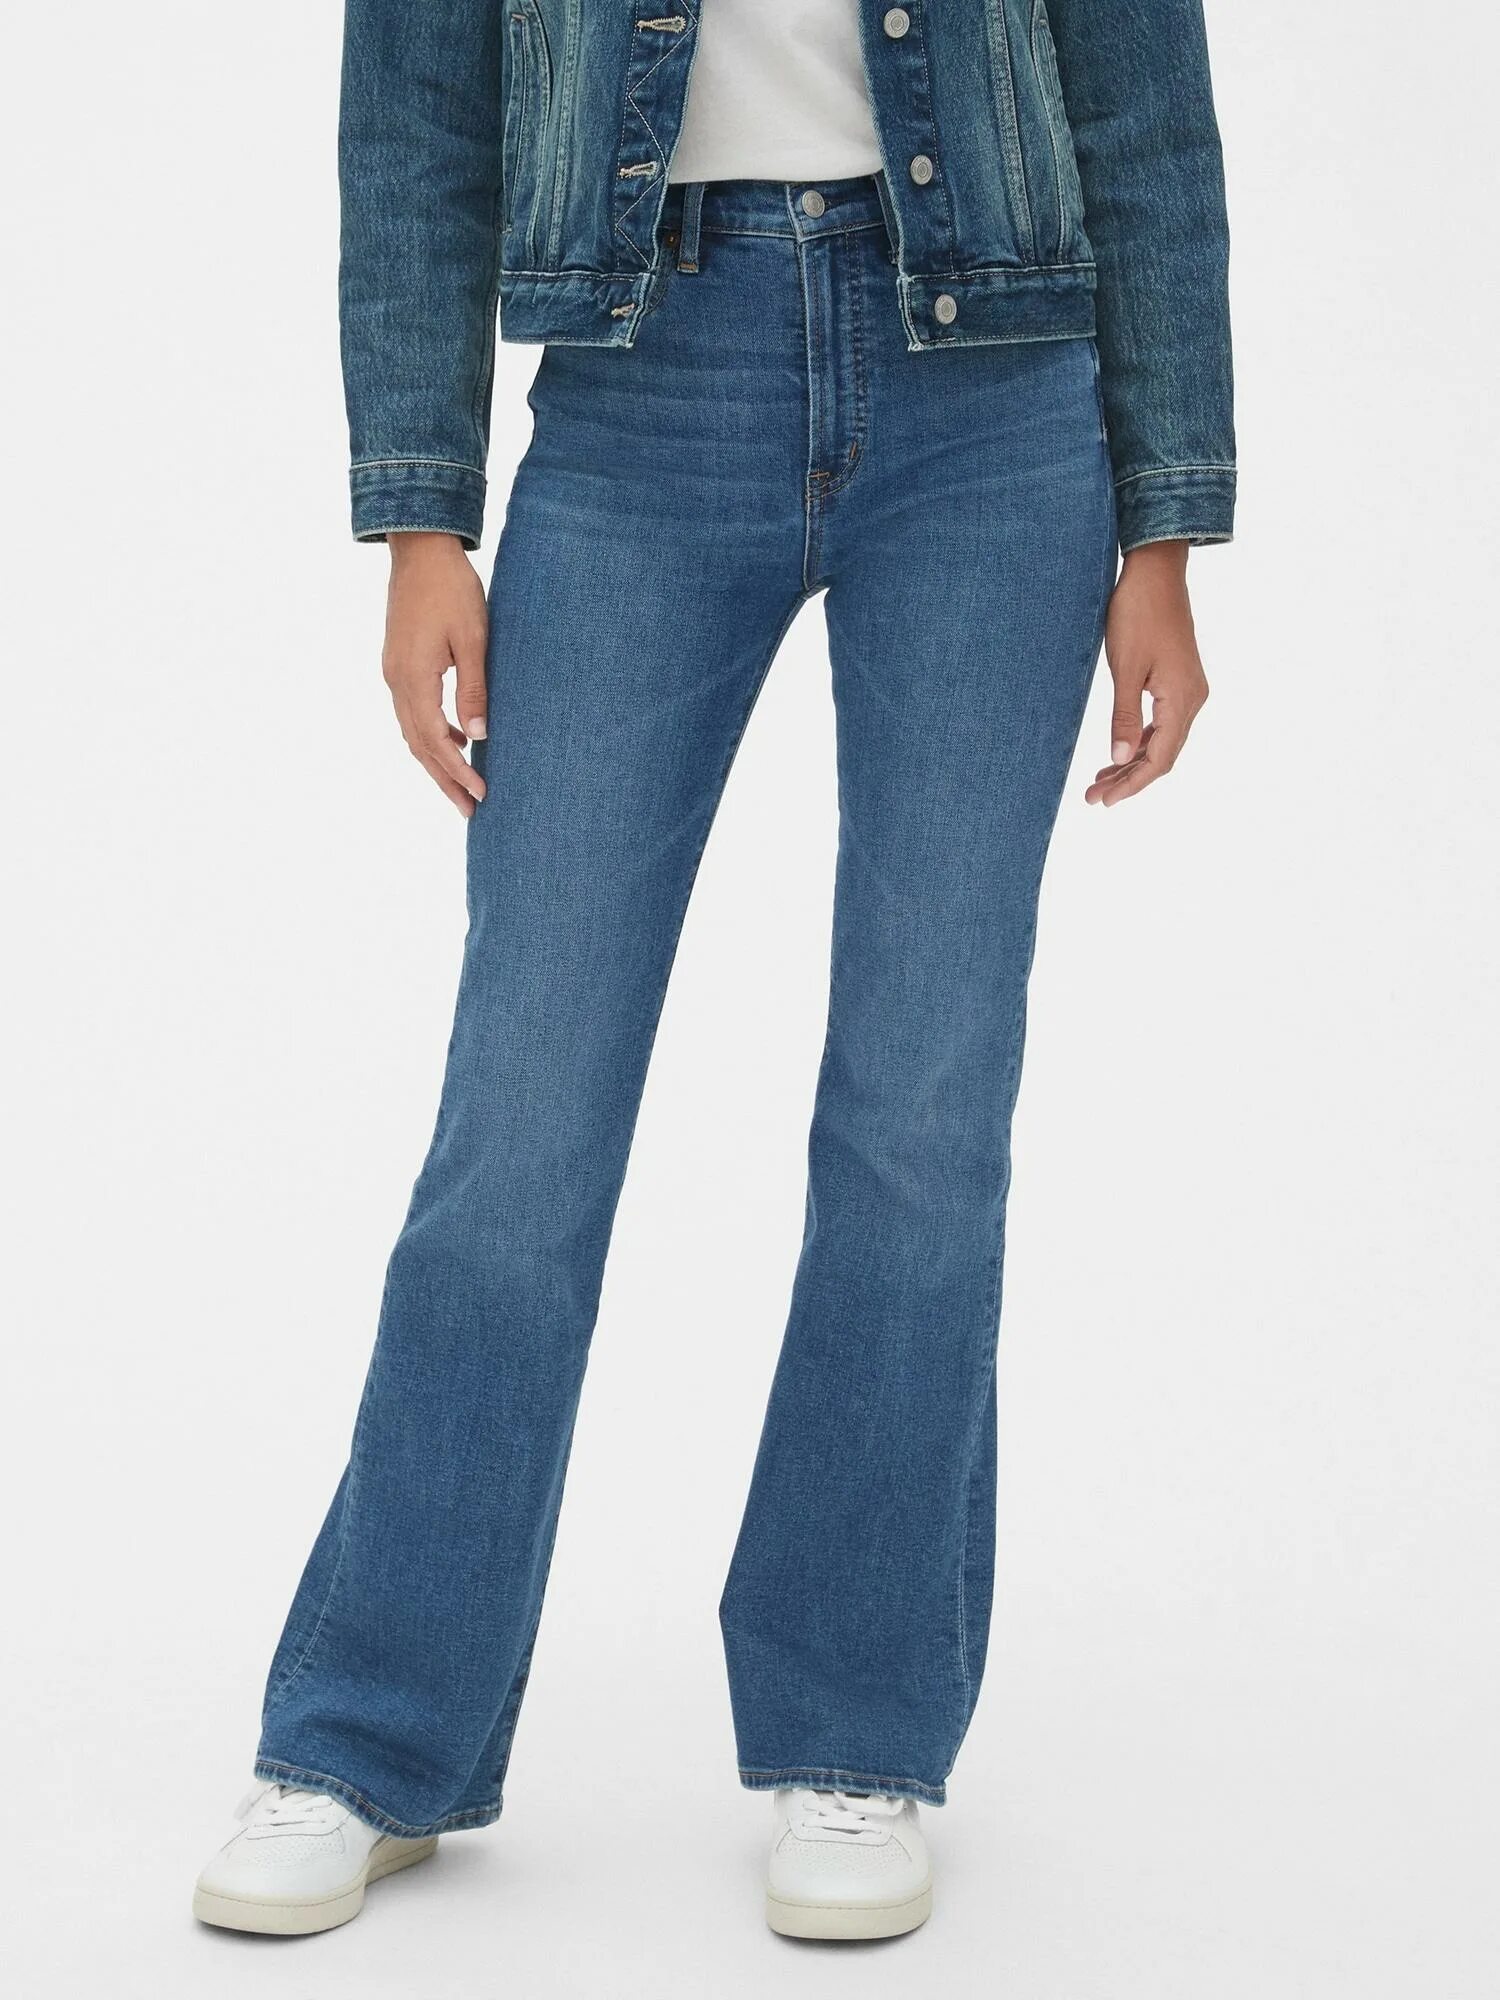 70s High Flare джинсы Step. Gap Crop Flare Jeans. Gap 70s Flare джинсы клеш. 70 High Flare Jeans.